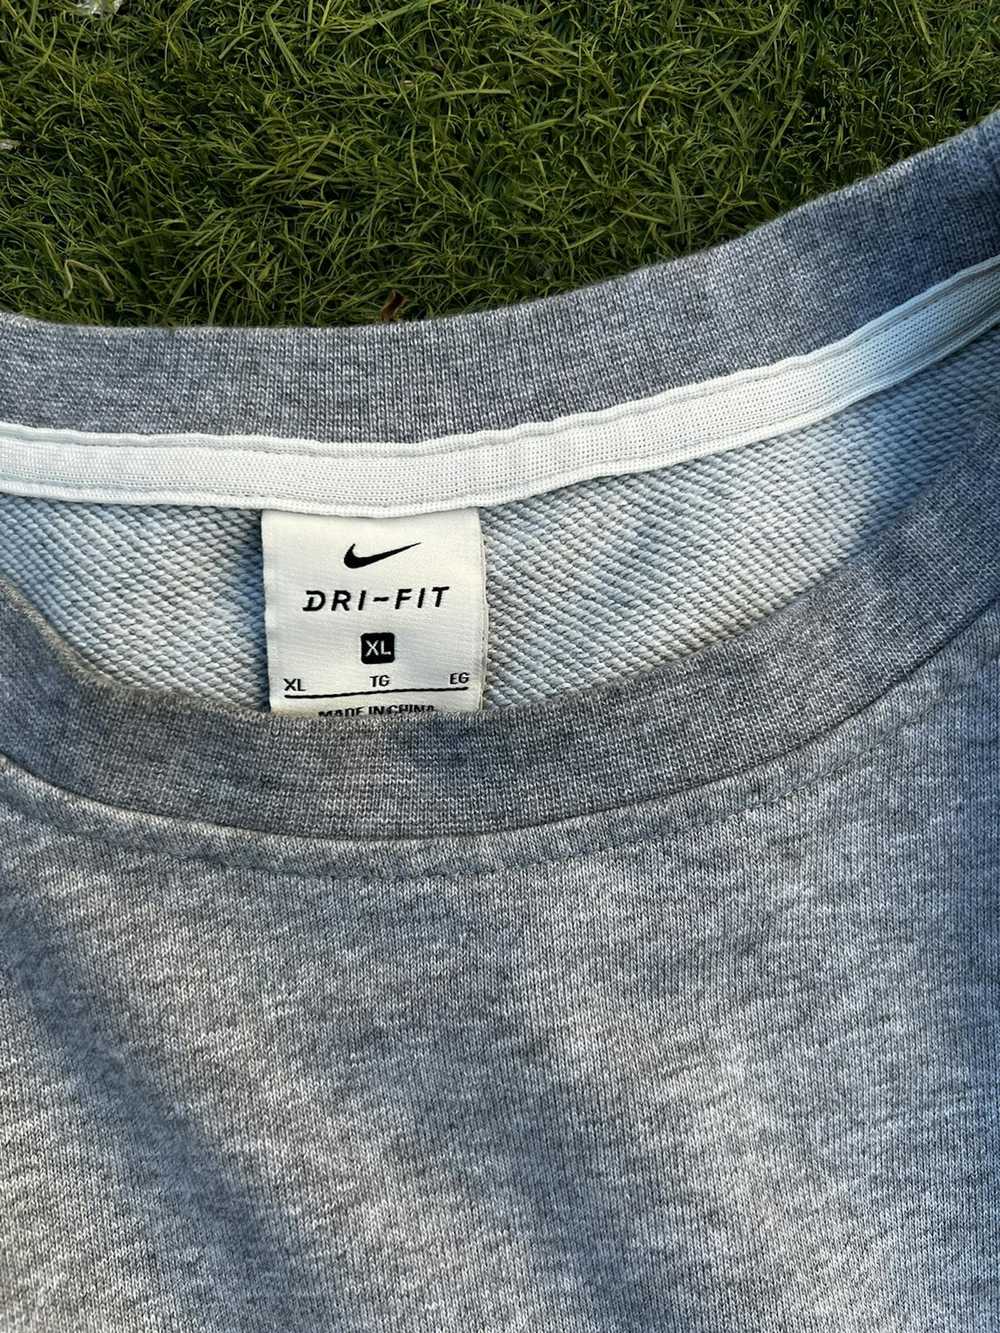 Nike Nike “ Standard Issue “ Crewneck grey - image 4